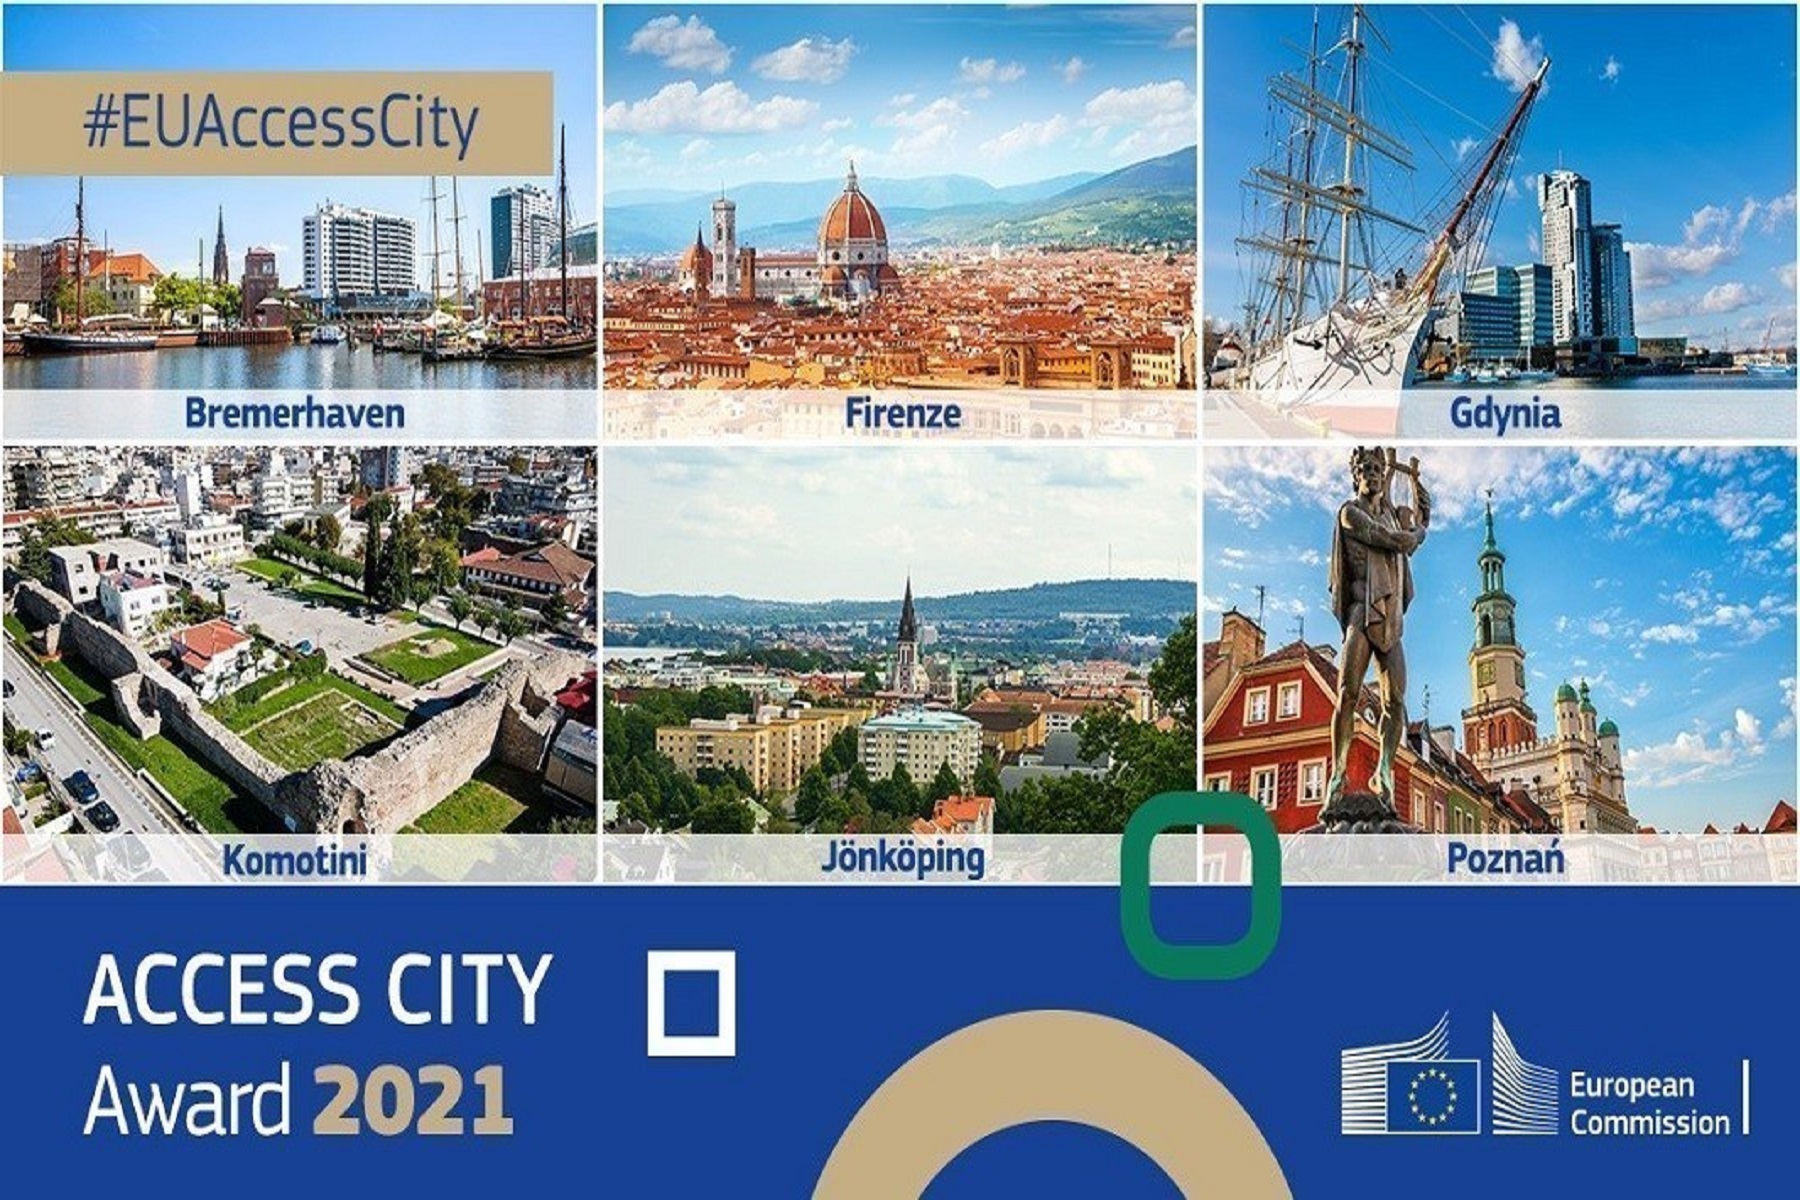 Access City Award 2021: Κομοτηνή – Μία από τις έξι Ευρωπαϊκές πόλεις που διακρίθηκαν για προσβασιμότητα